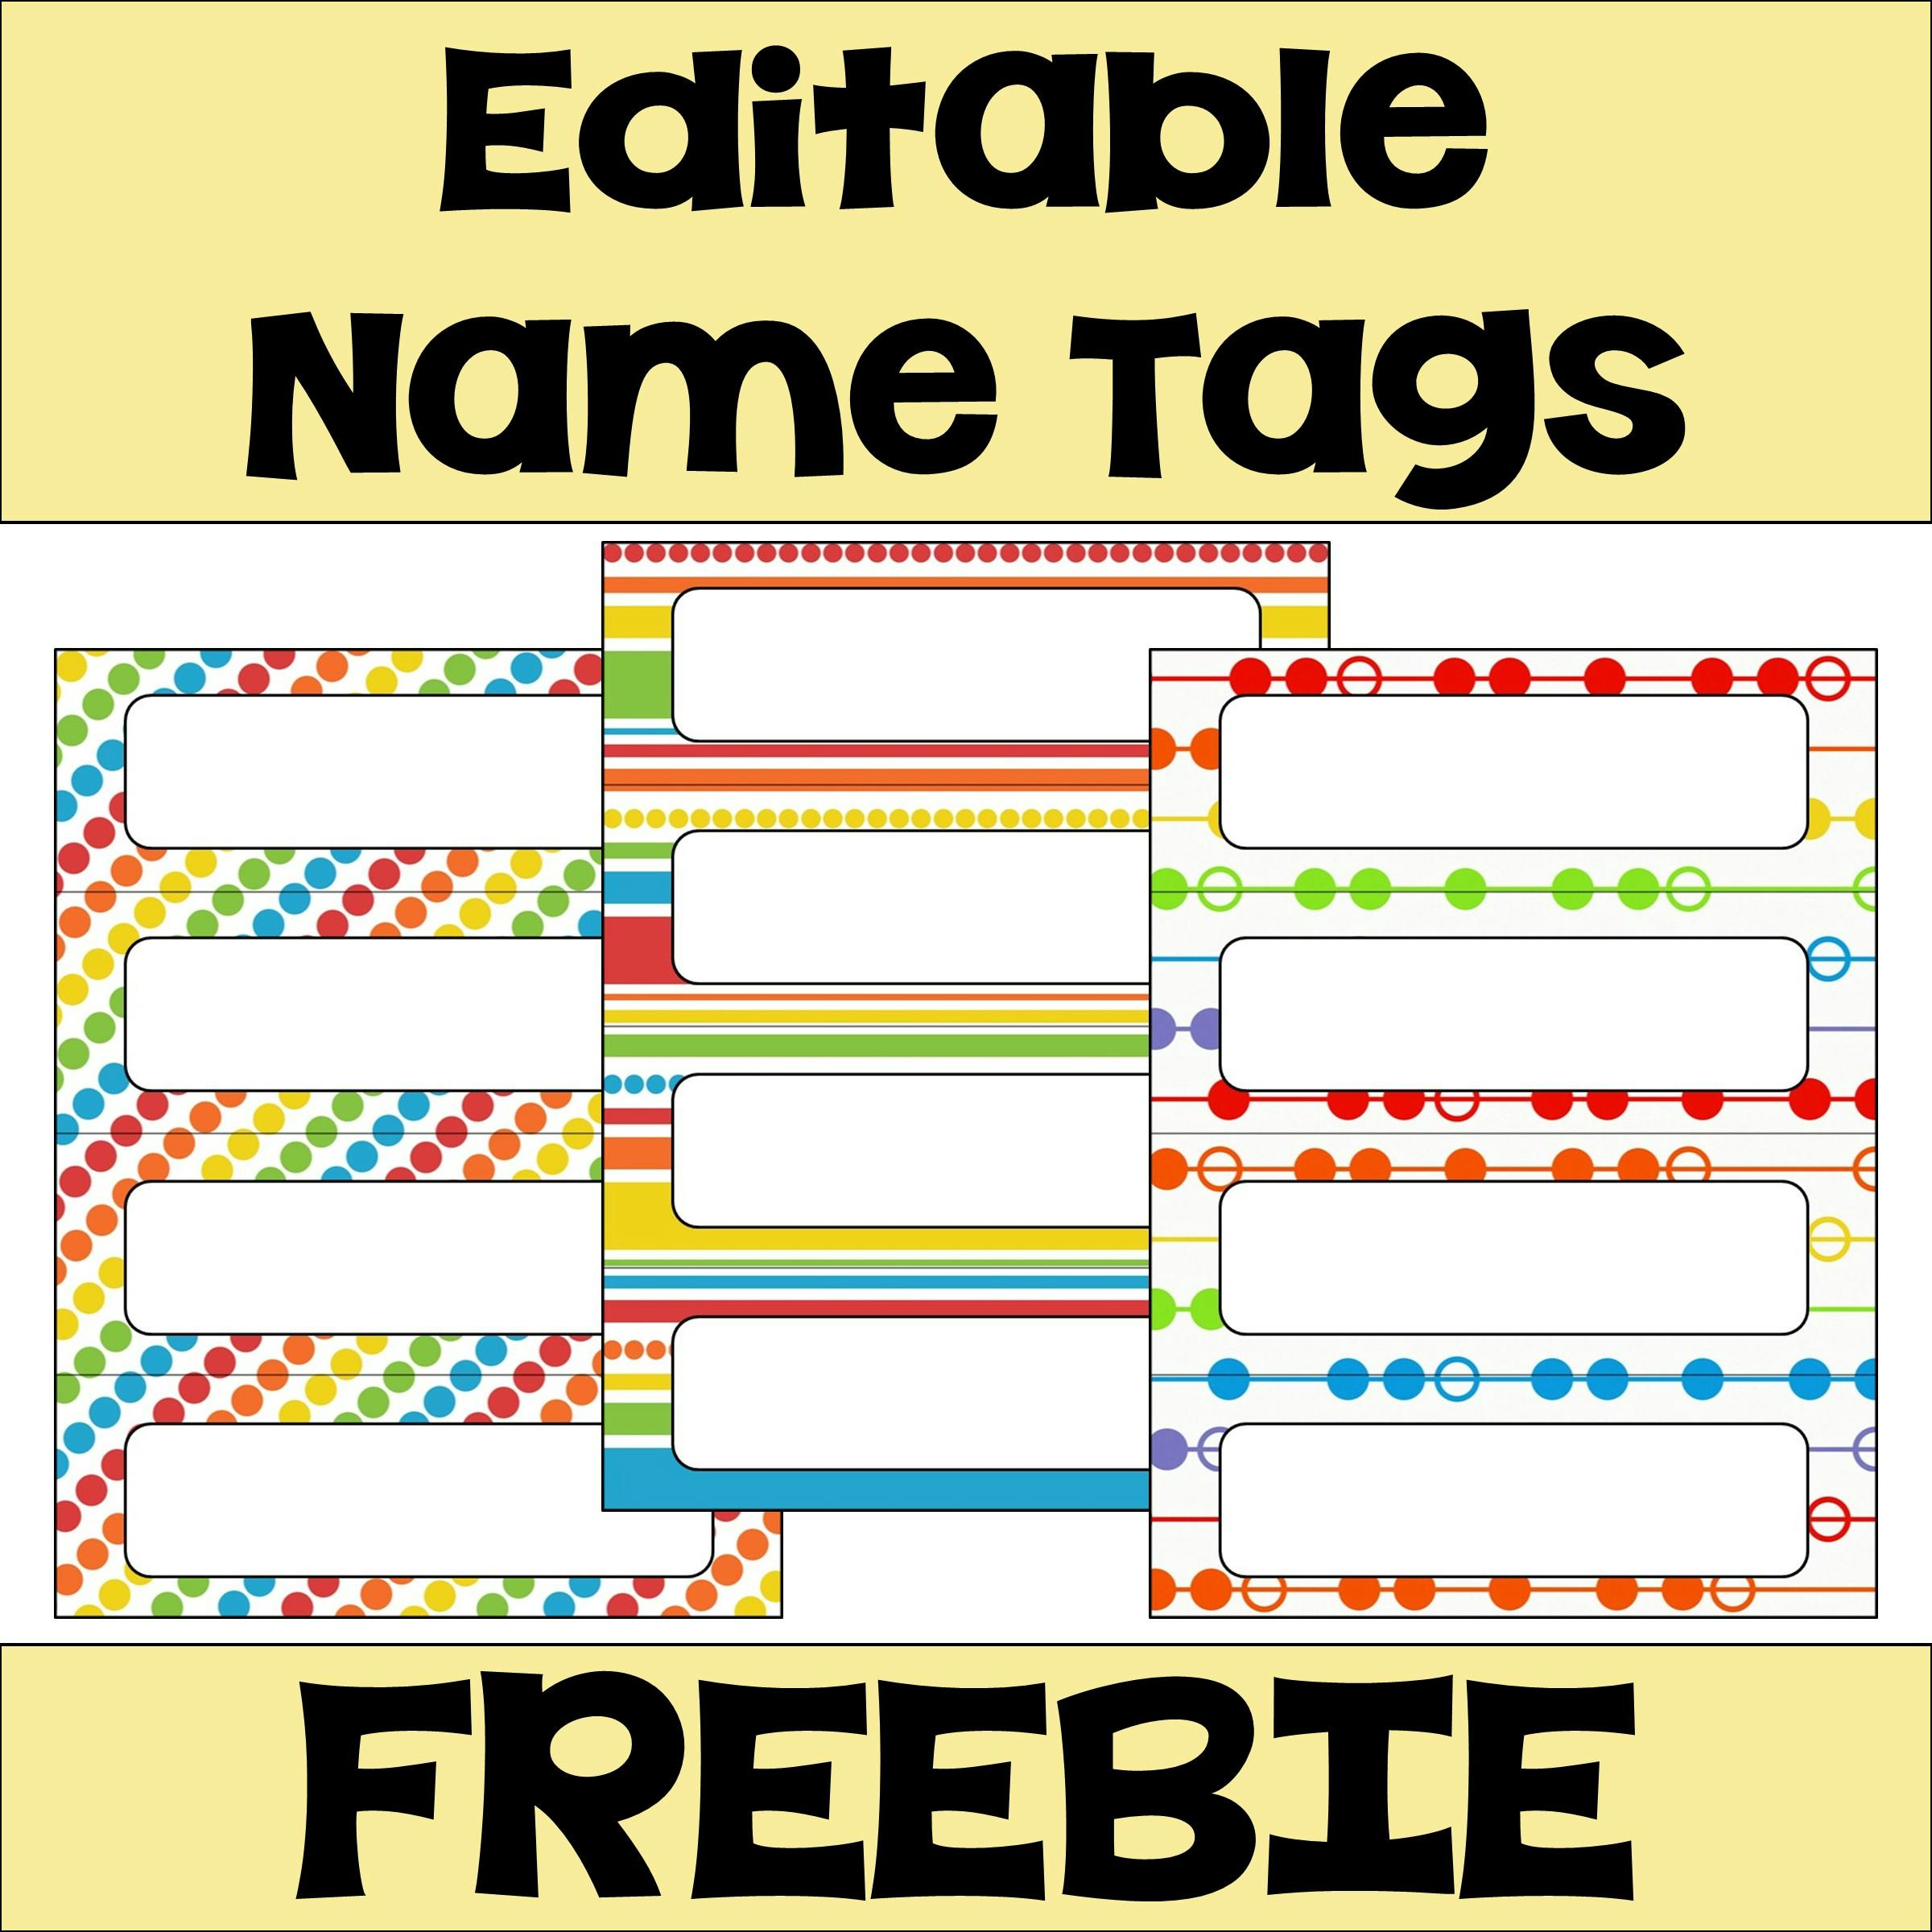 editable-name-tags-freebie